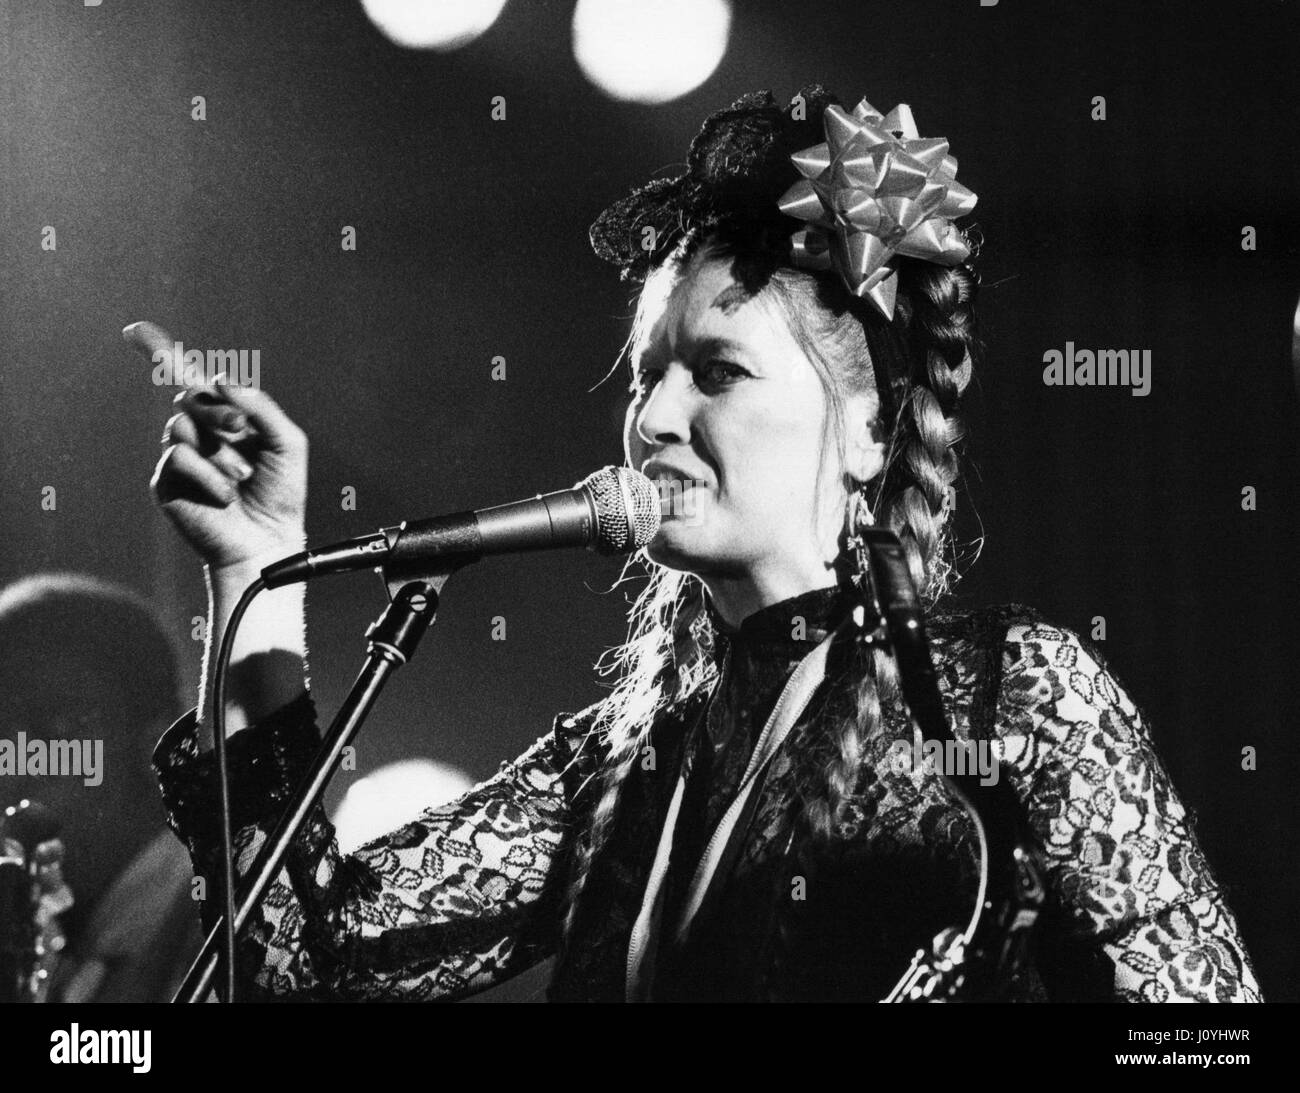 Lene Lovich, U.S. pop singer, performs live on stage in London, England on September 29, 1978. Stock Photo